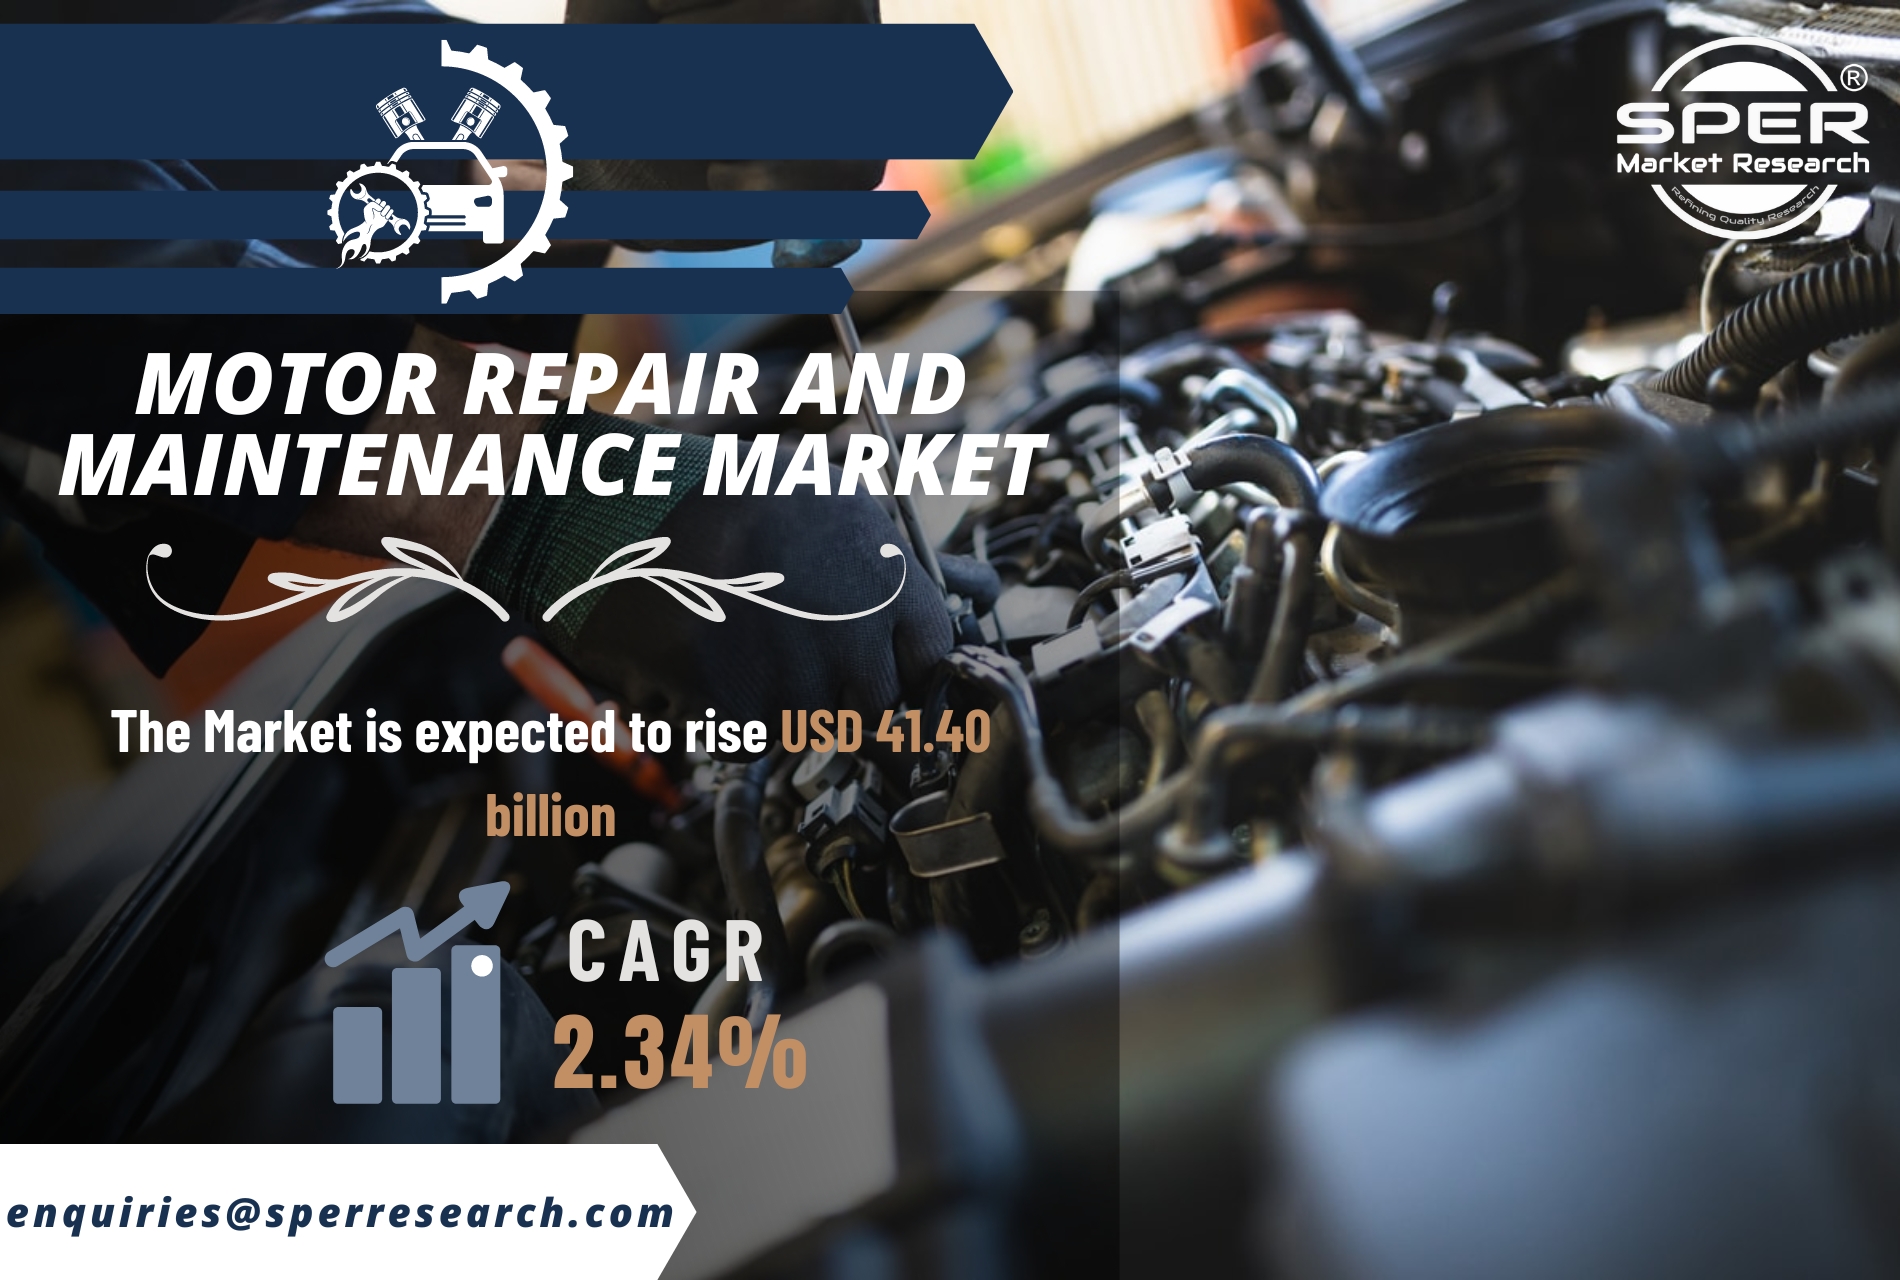 Motor Repair and Maintenance Market Growth, Share, Revenue, Forecast 2033